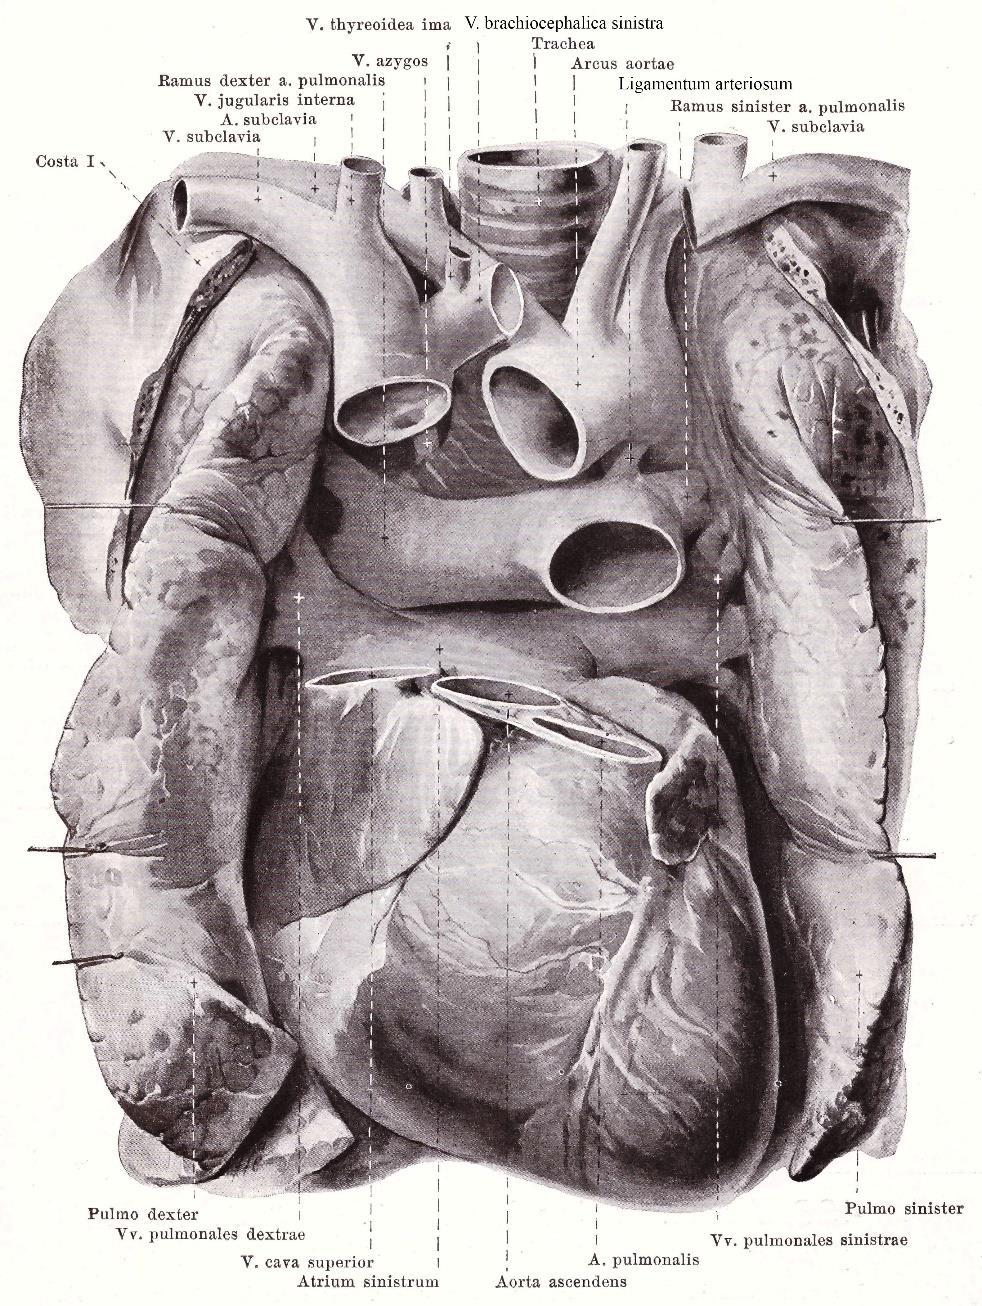 Vasa publica rechtes Herz: Vena cava superior Vena cava inferior rechter Vorhof rechter Kammer Truncus pulmonalis Arteria pulmonalis - dextra - sinistra Spalteholz linkes